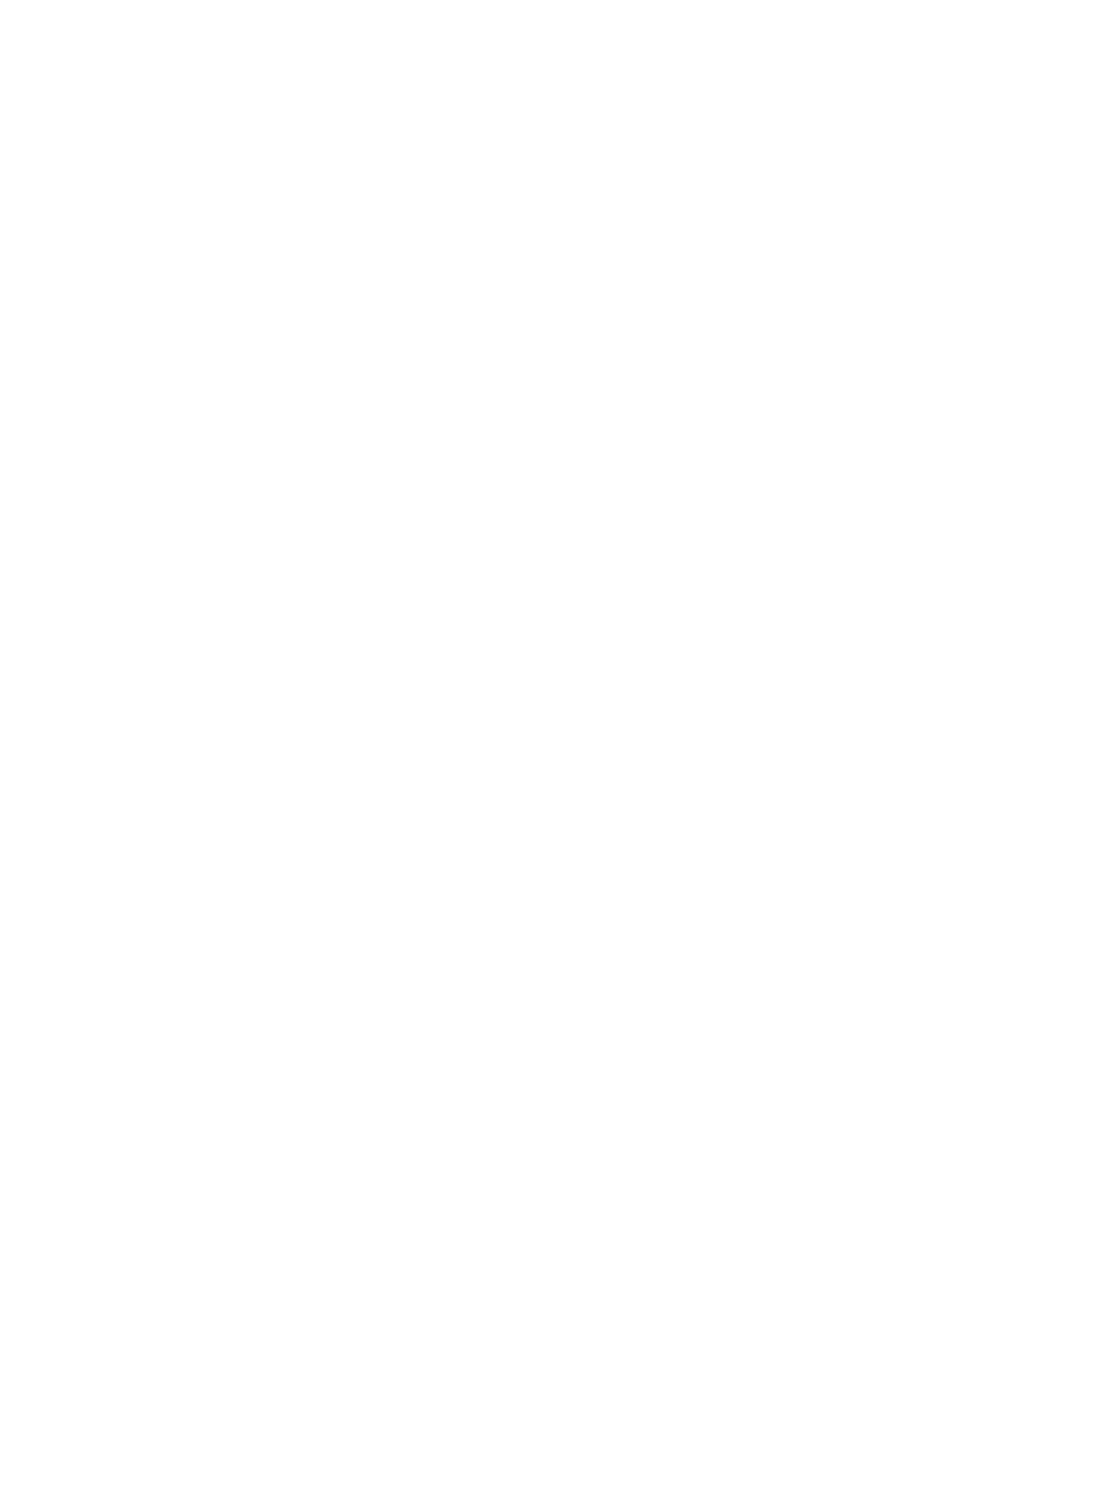 San Antonio Book Festival